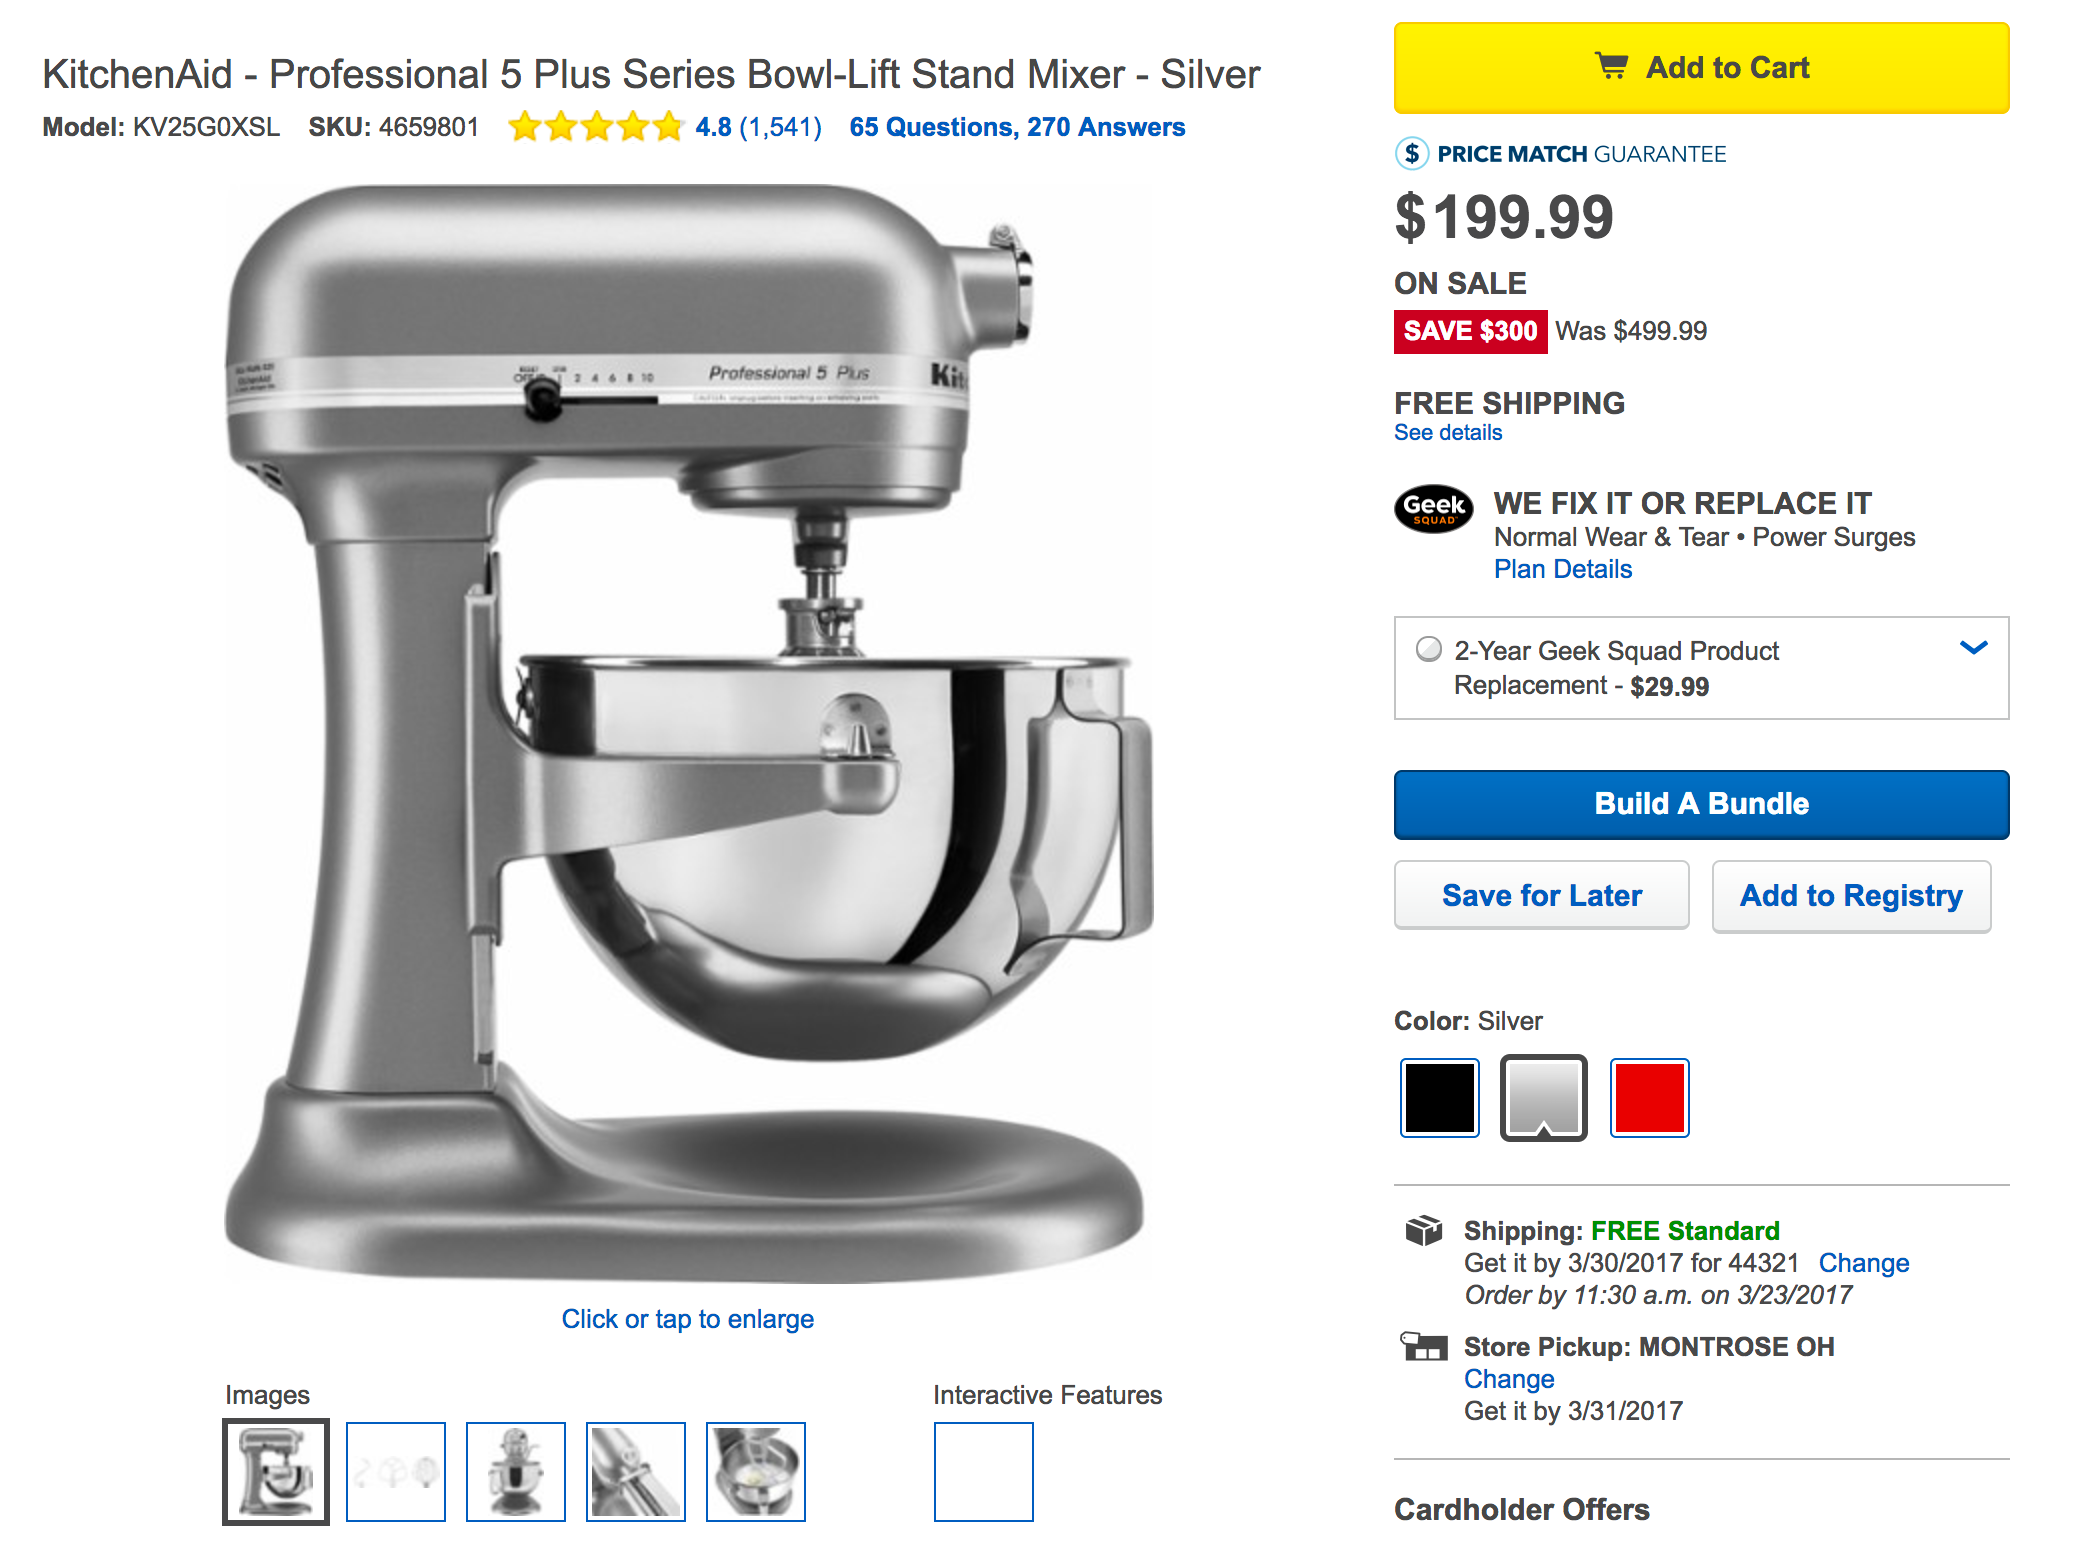 KitchenAid Professional 5qt Mixer only $199.99 & More 